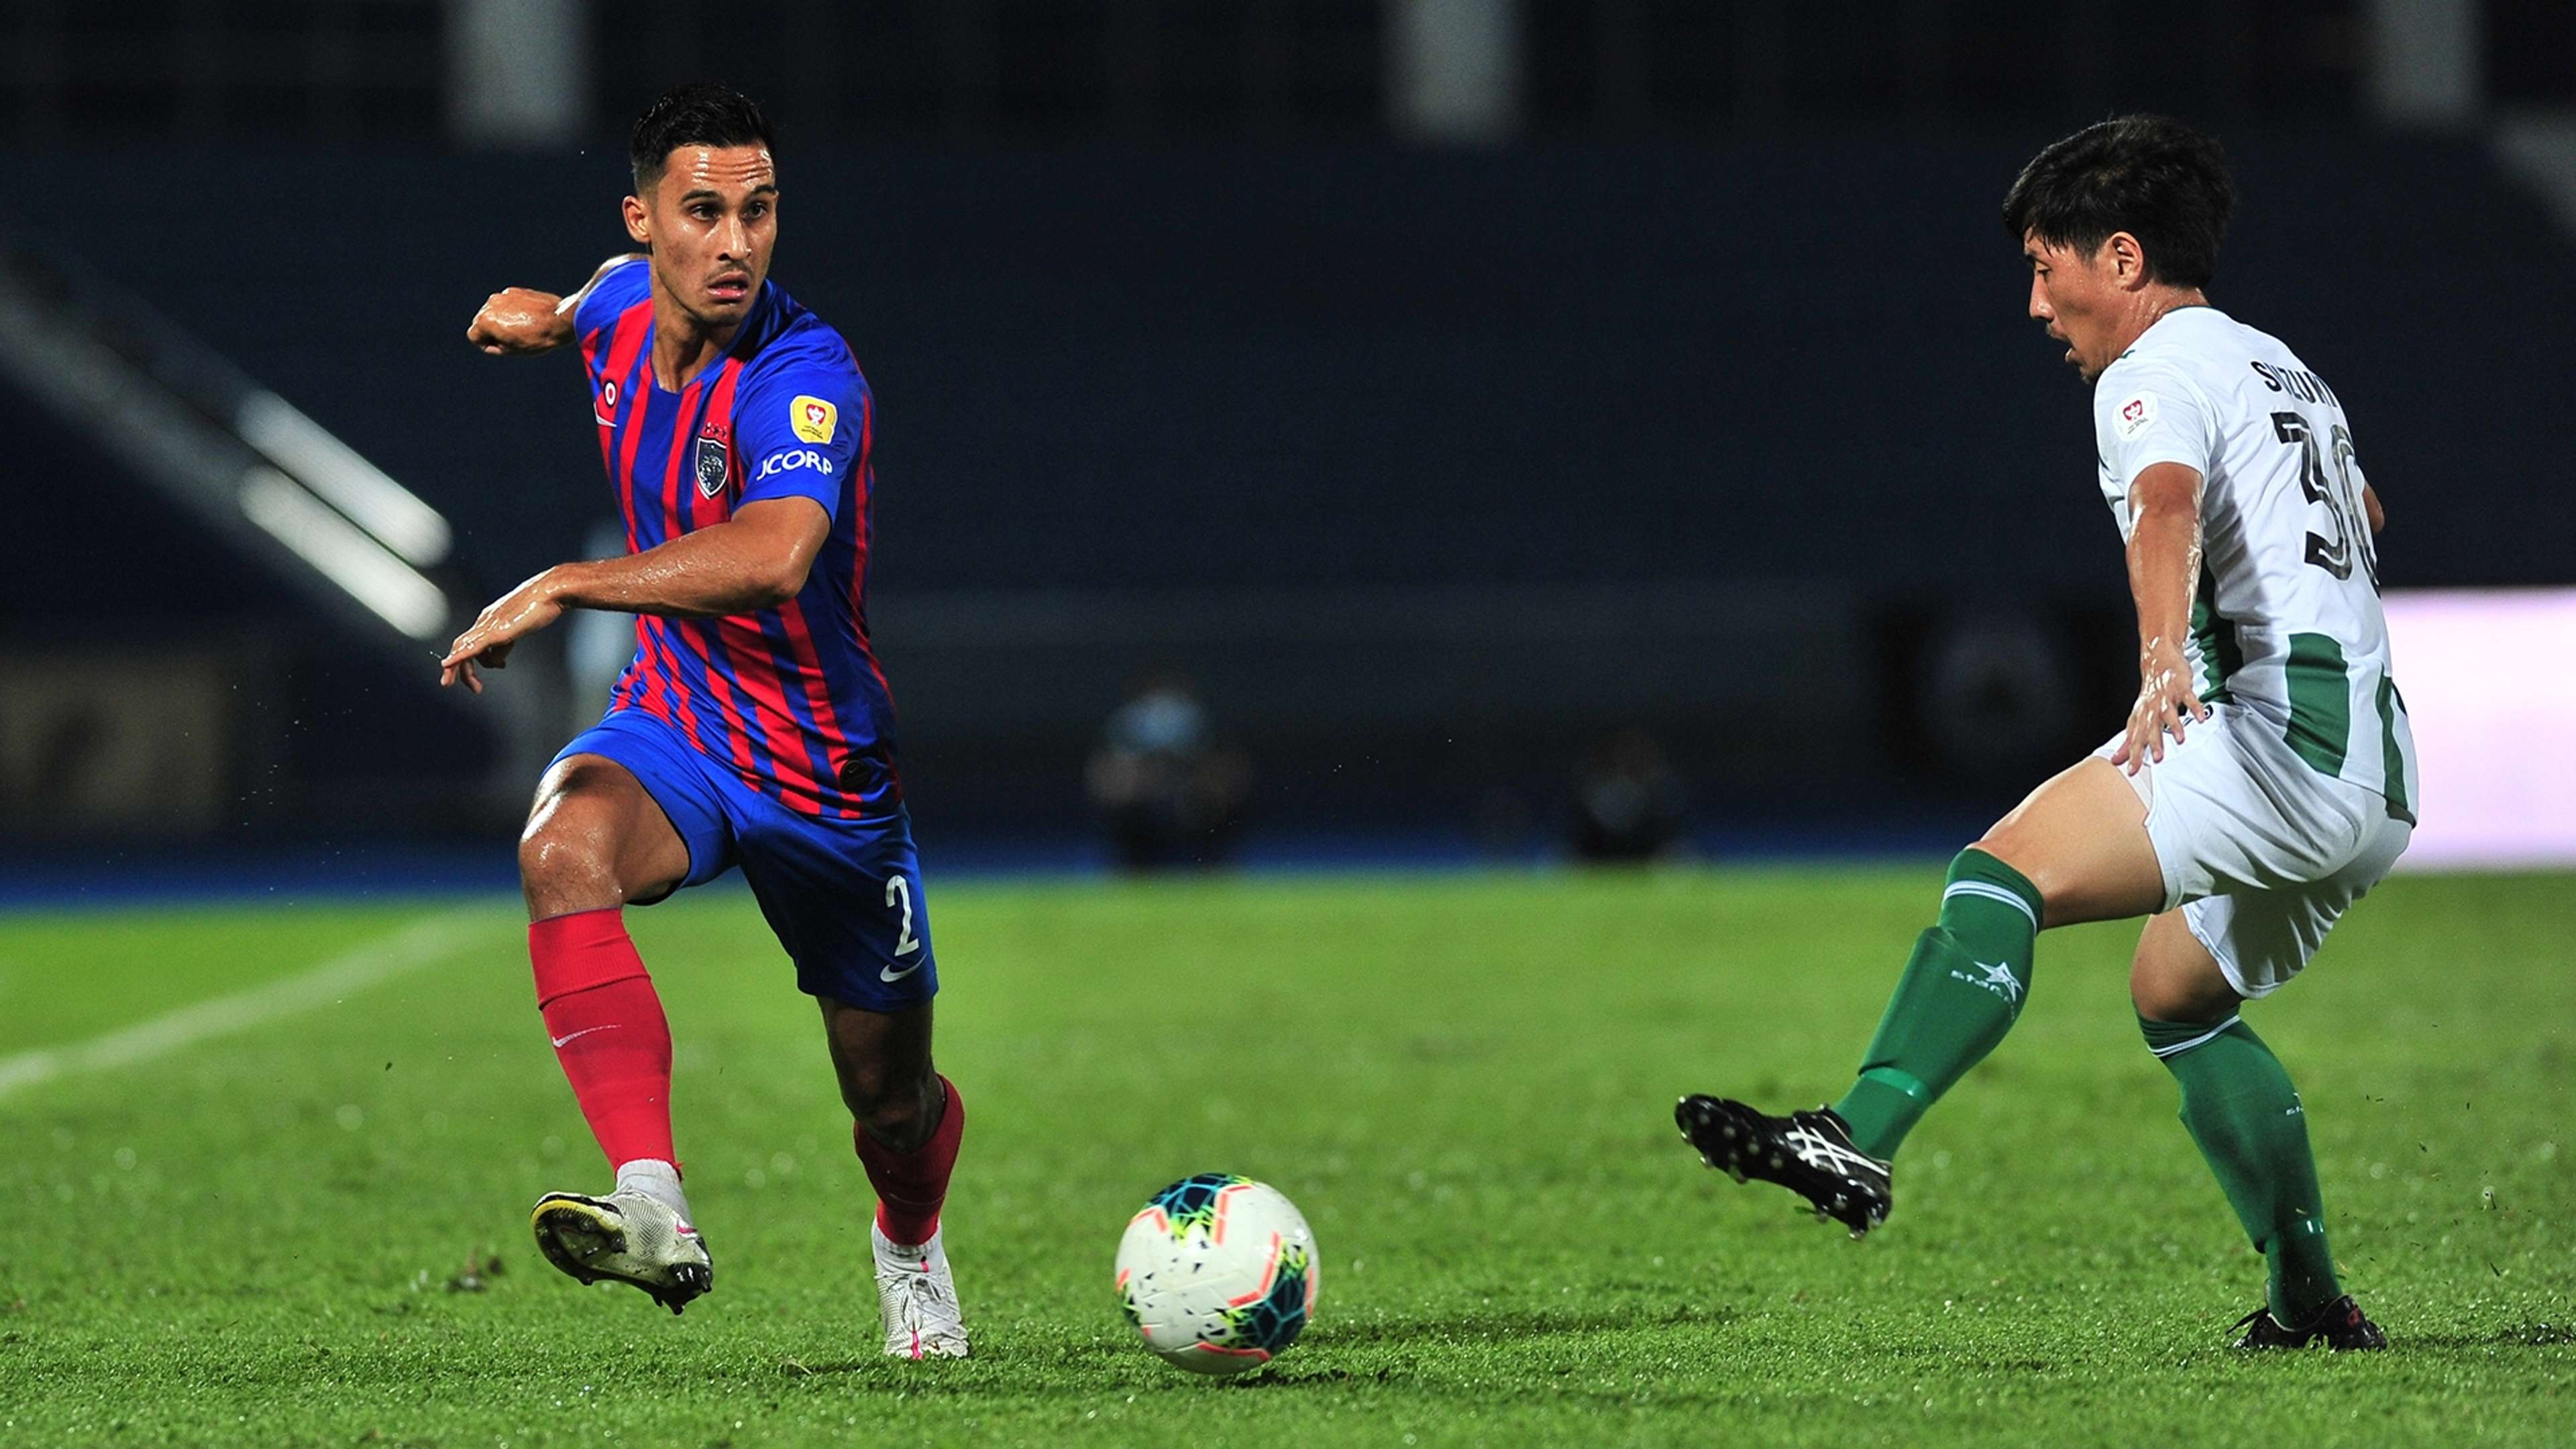 Matthew Davies, Johor Darul Ta'zim v Kuching FA, Malaysia Cup, 6 Nov 2020